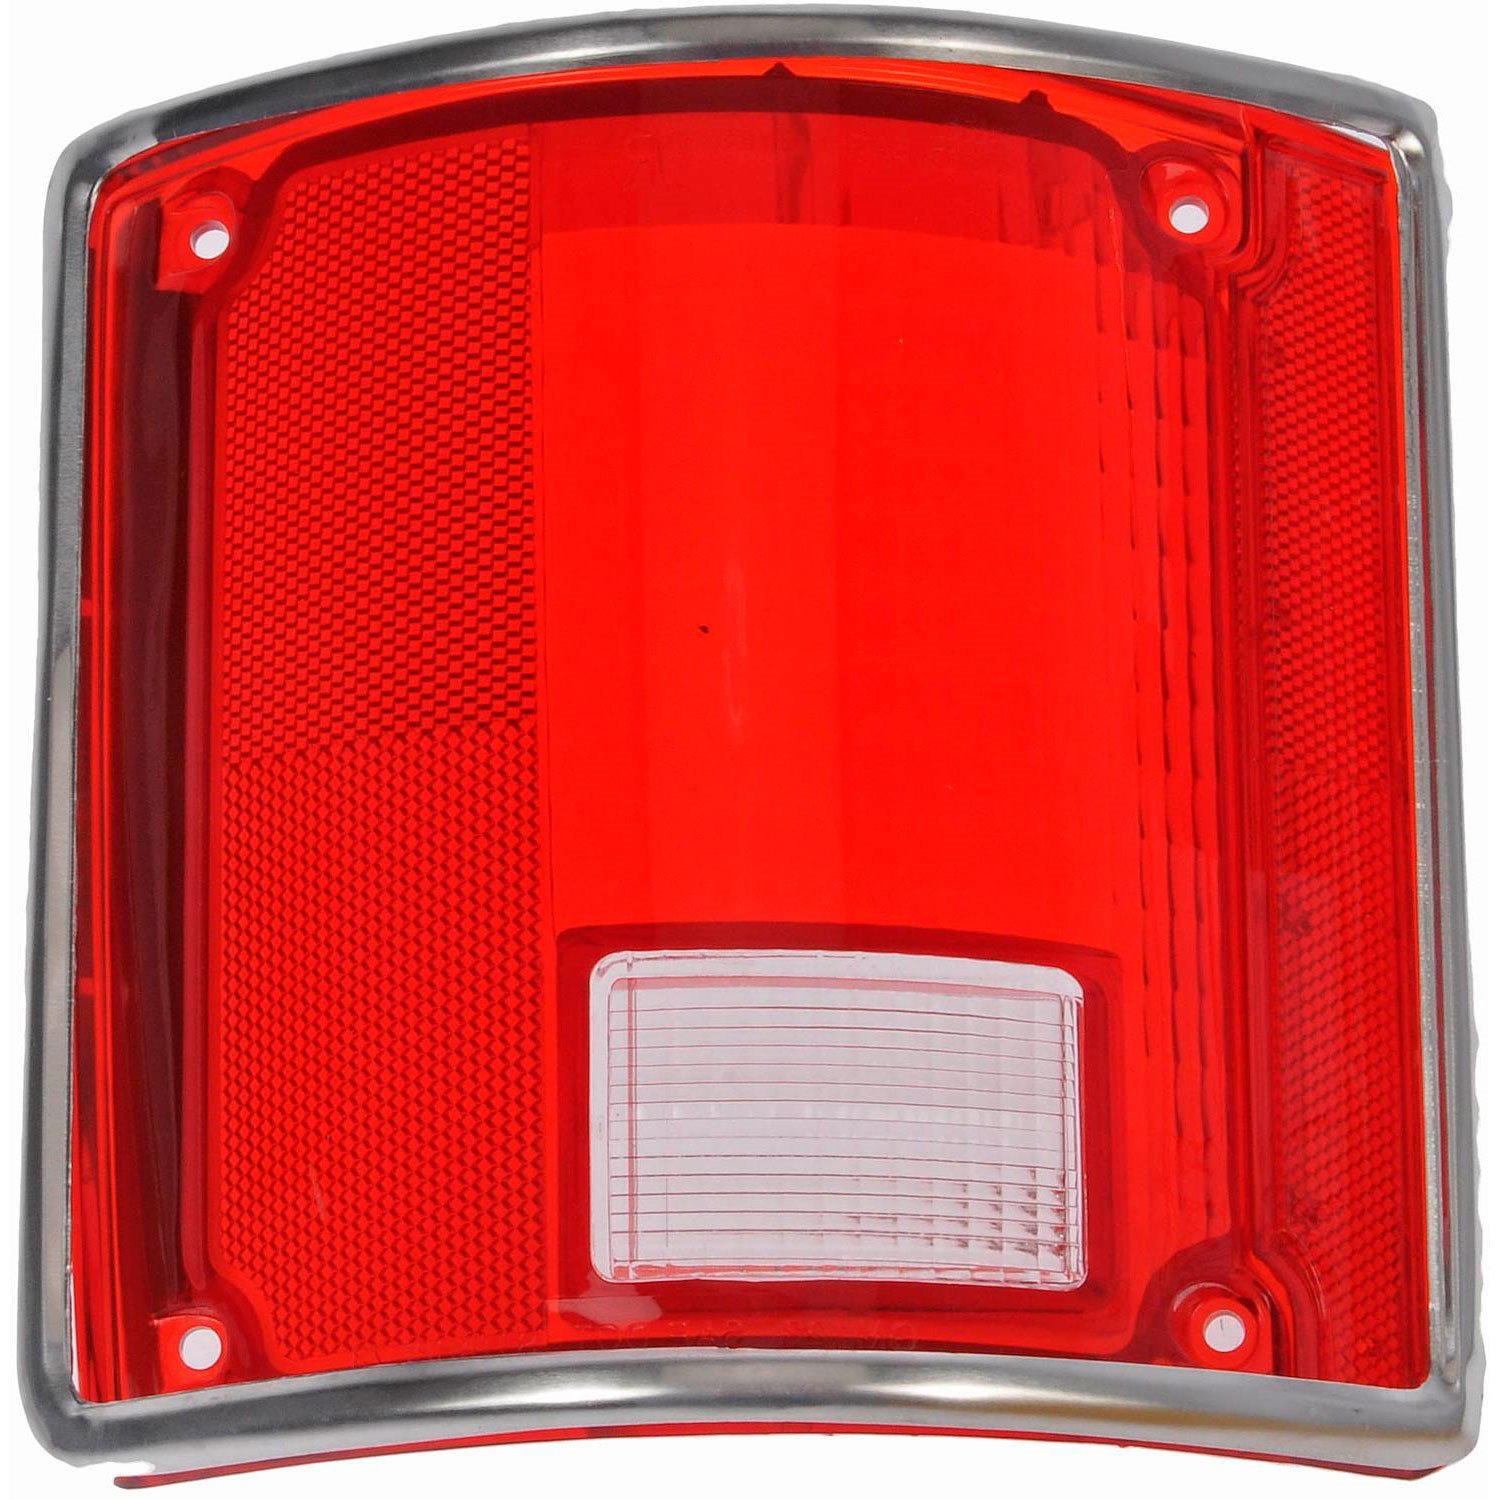 1610088 Tail Lamp Lens Fits Select 1973-1991 Chevrolet/GMC Models [Left/Driver Side]